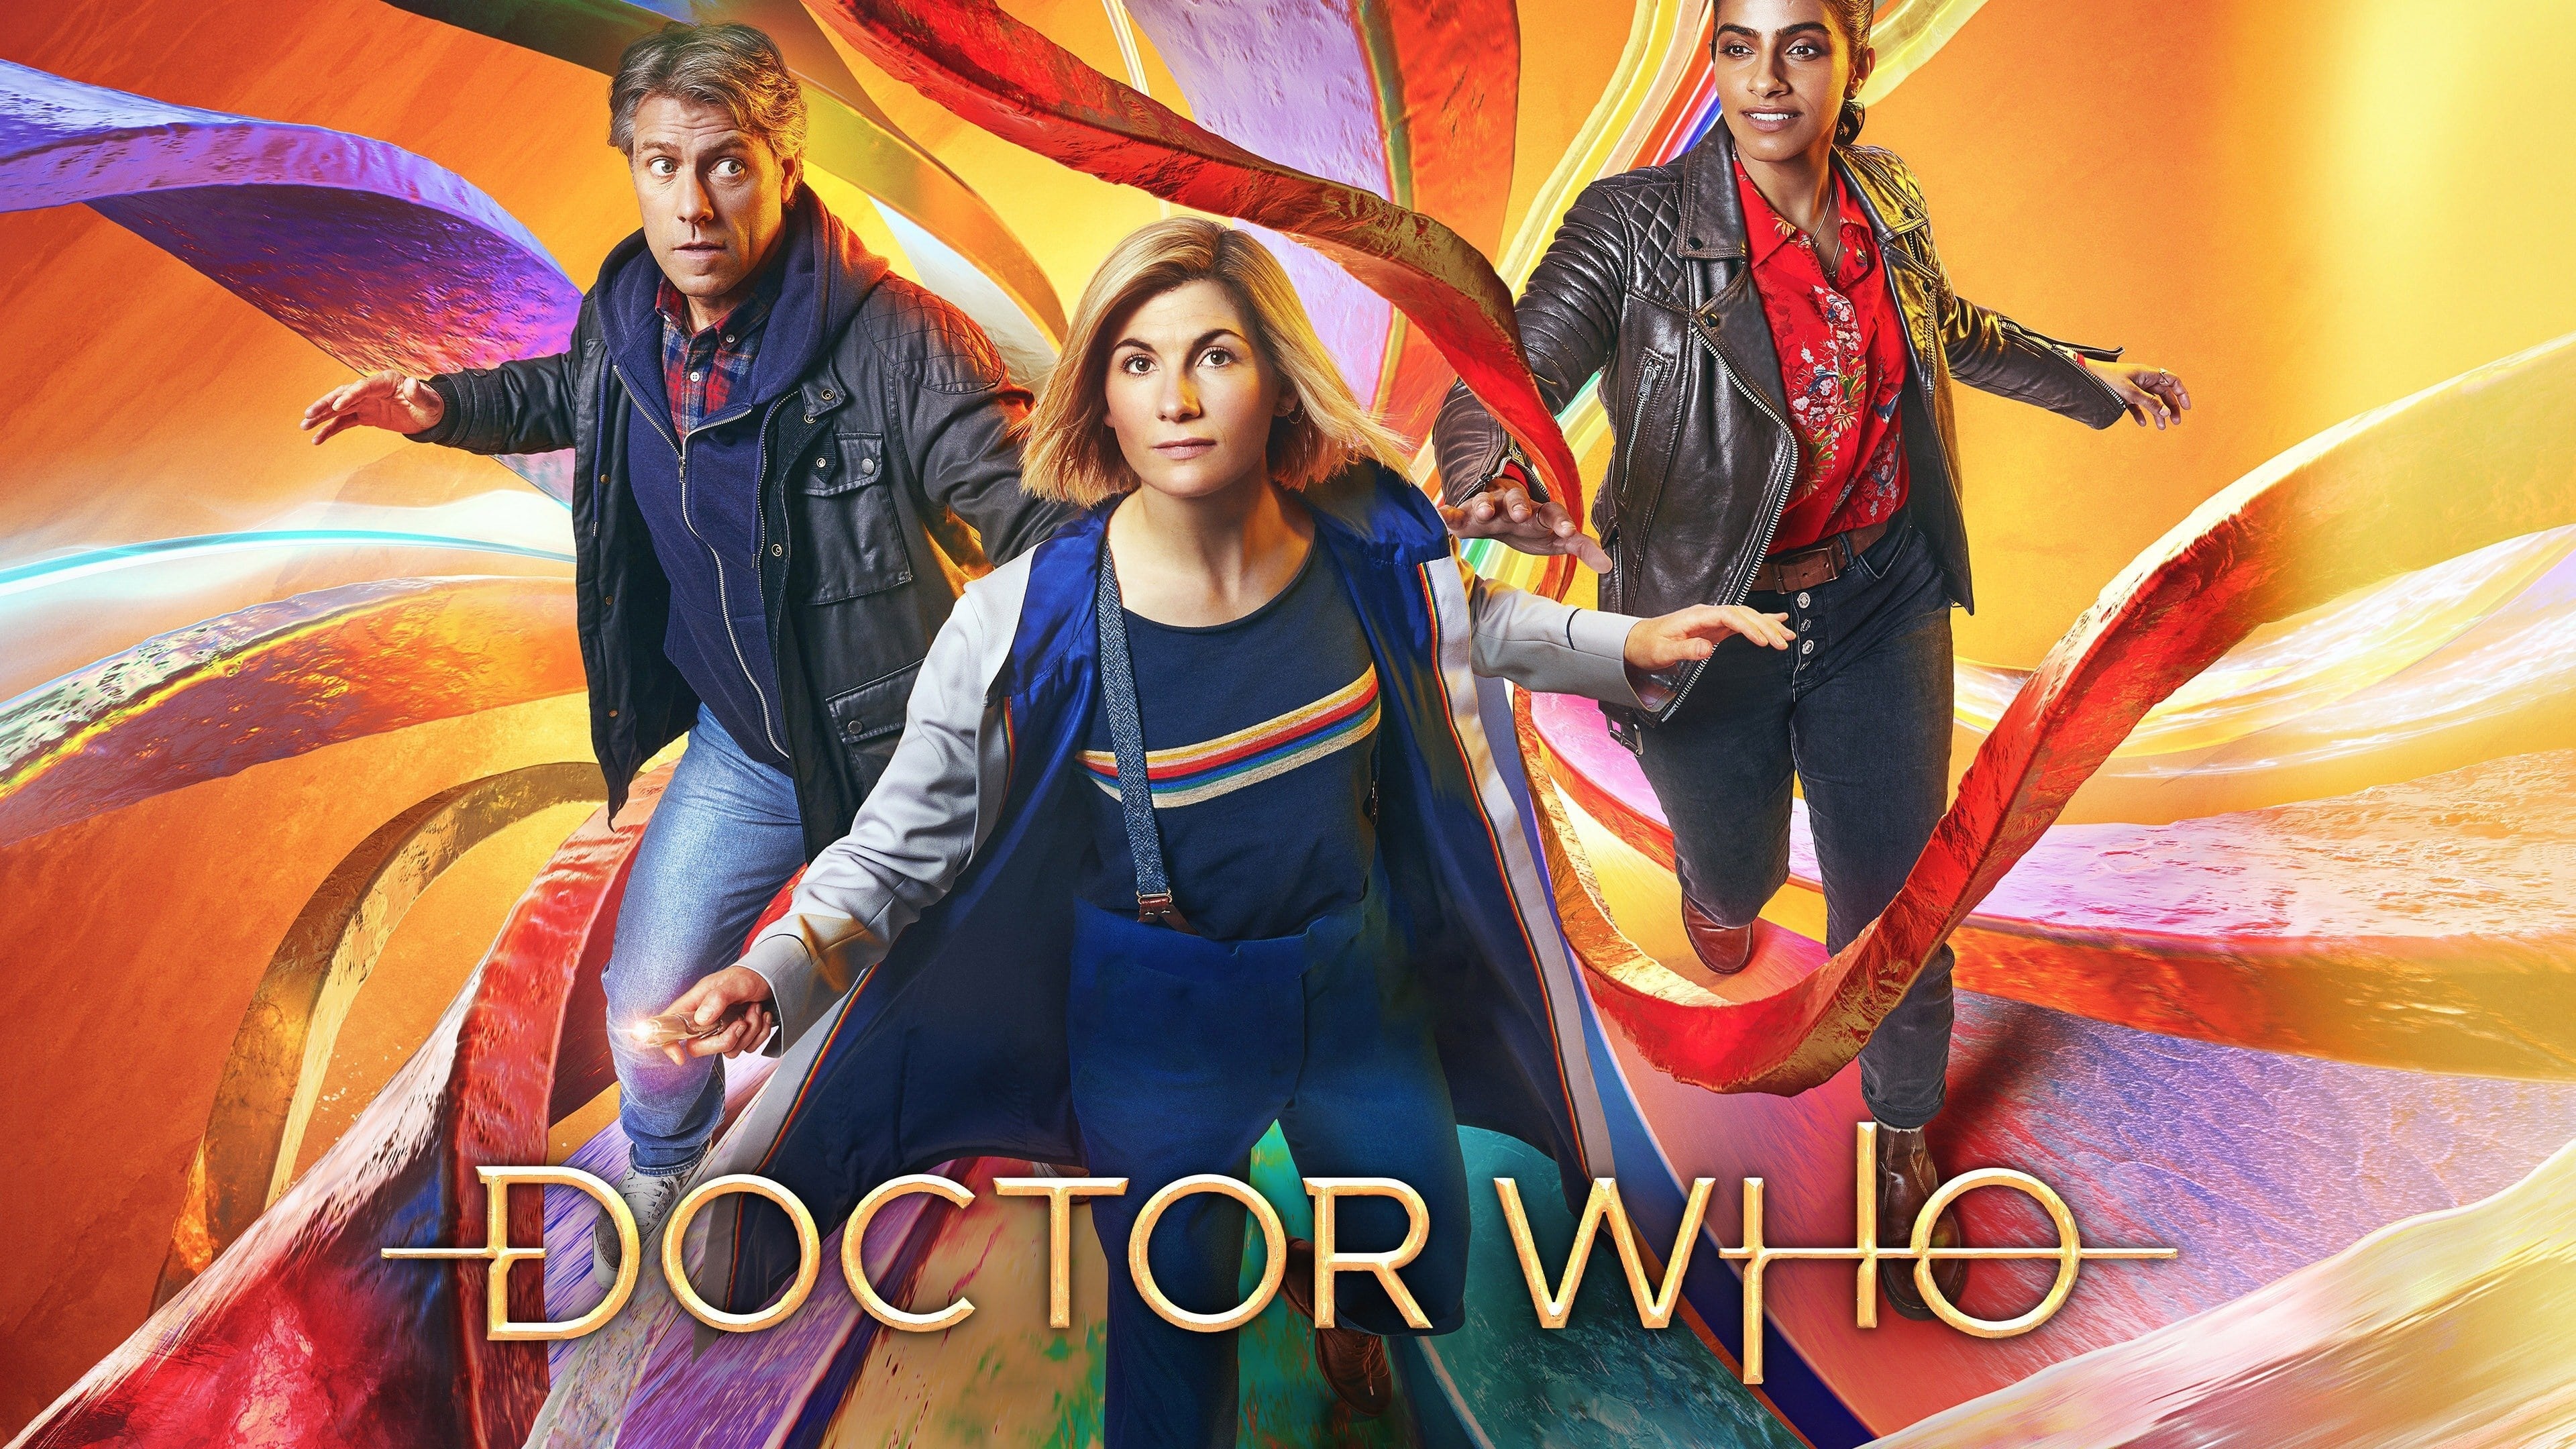 Doctor Who - Season 6